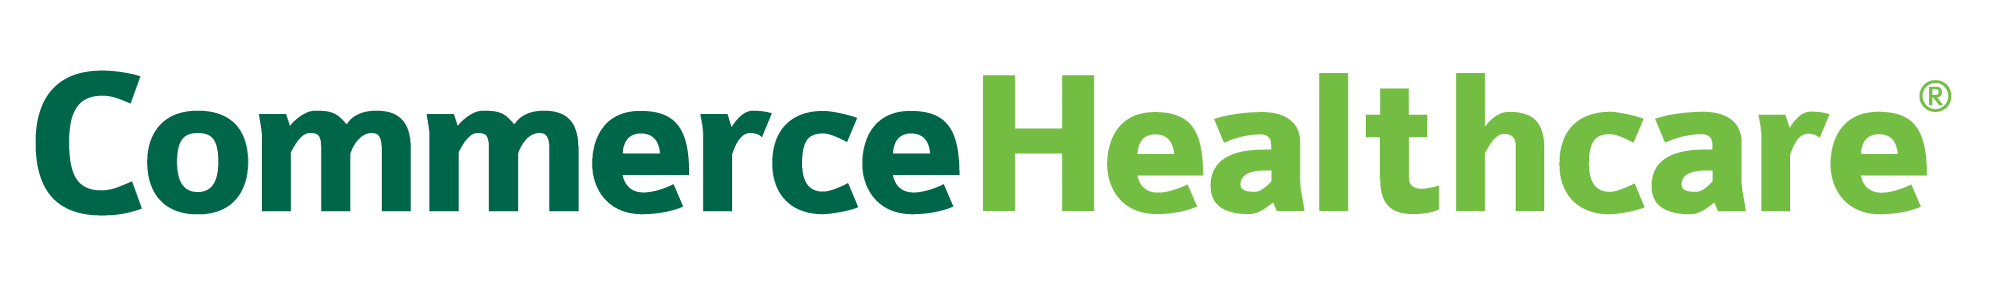 Commerce Healthcare logo